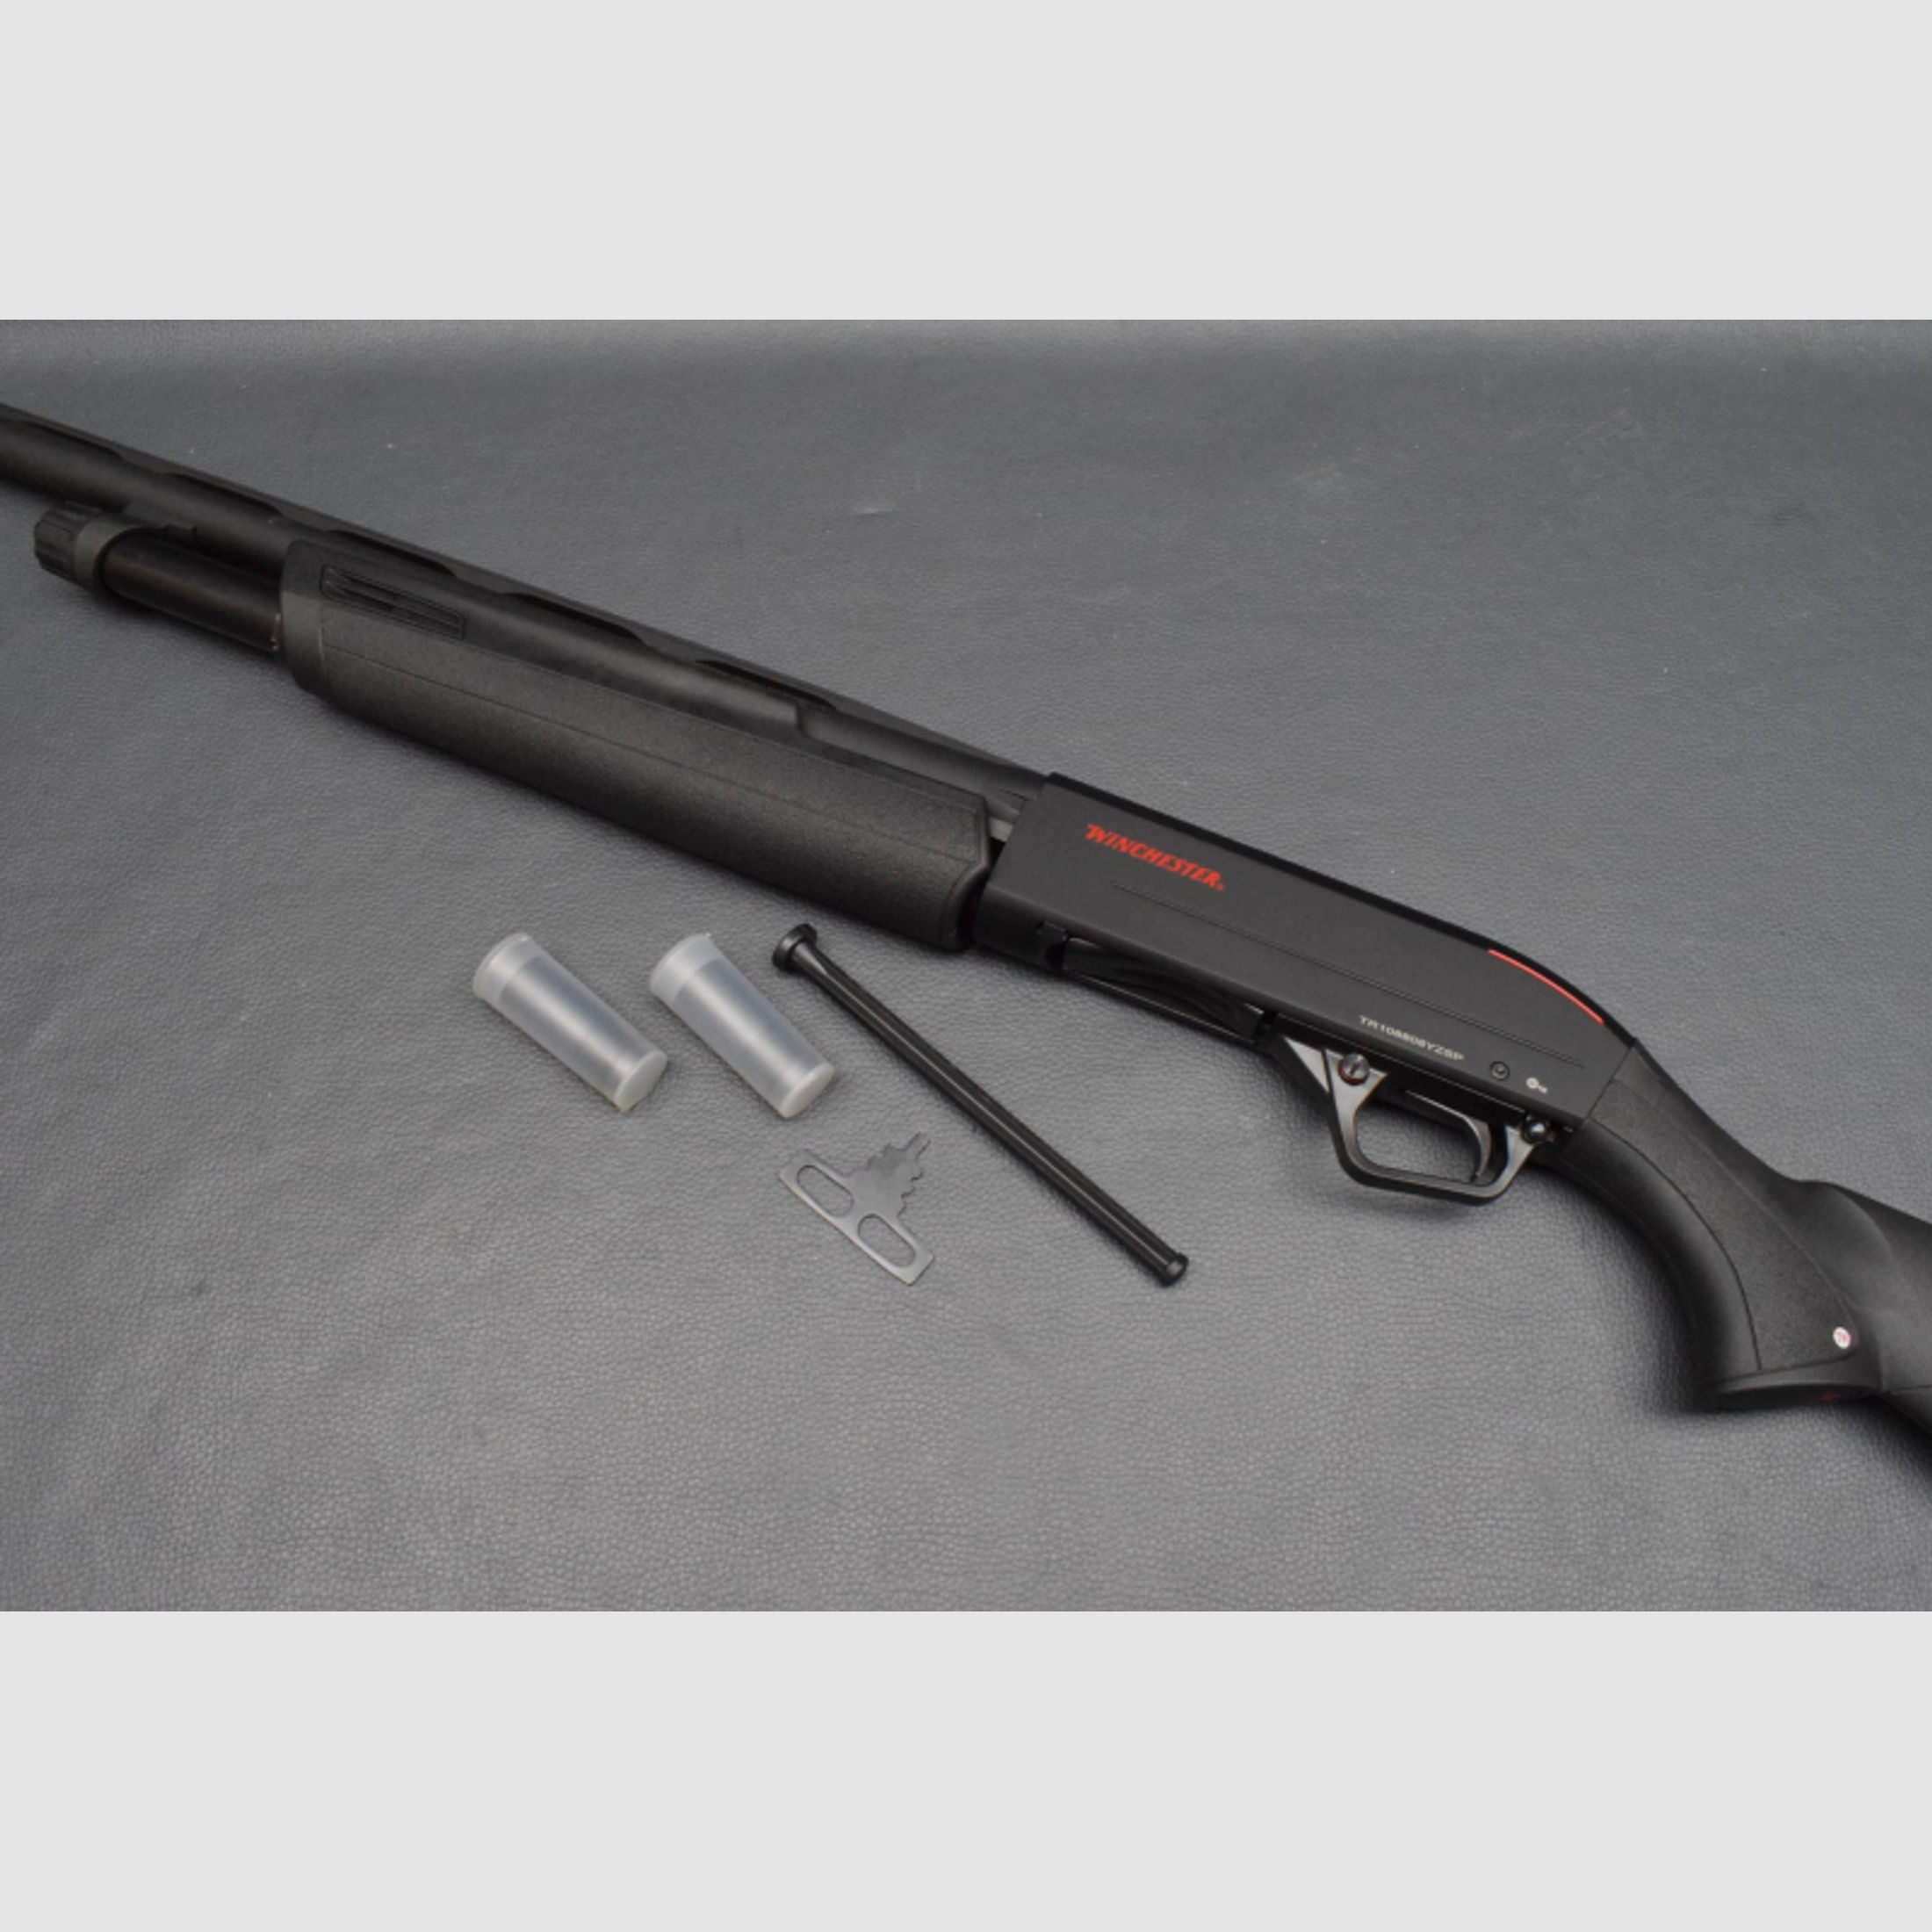 Winchester Repetierflinte, SXP Black Shadow, Lauflänge 66cm, Kal. 12/76 Magnum, Neuware